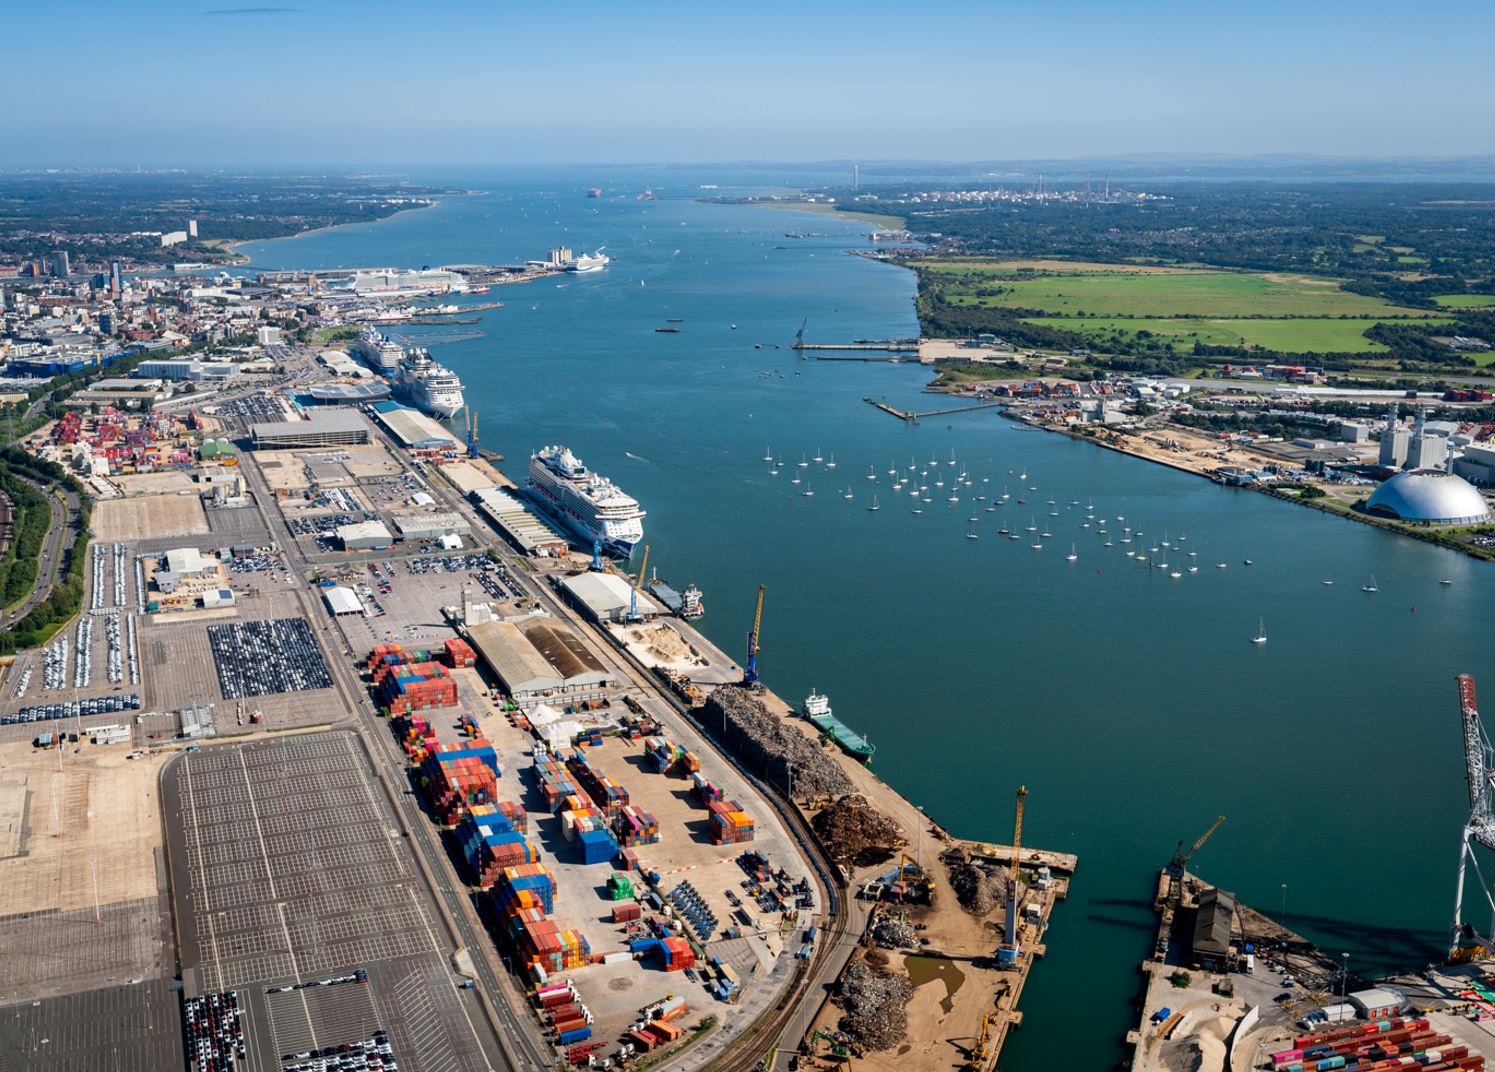 View from King George V Docks - Western Docks